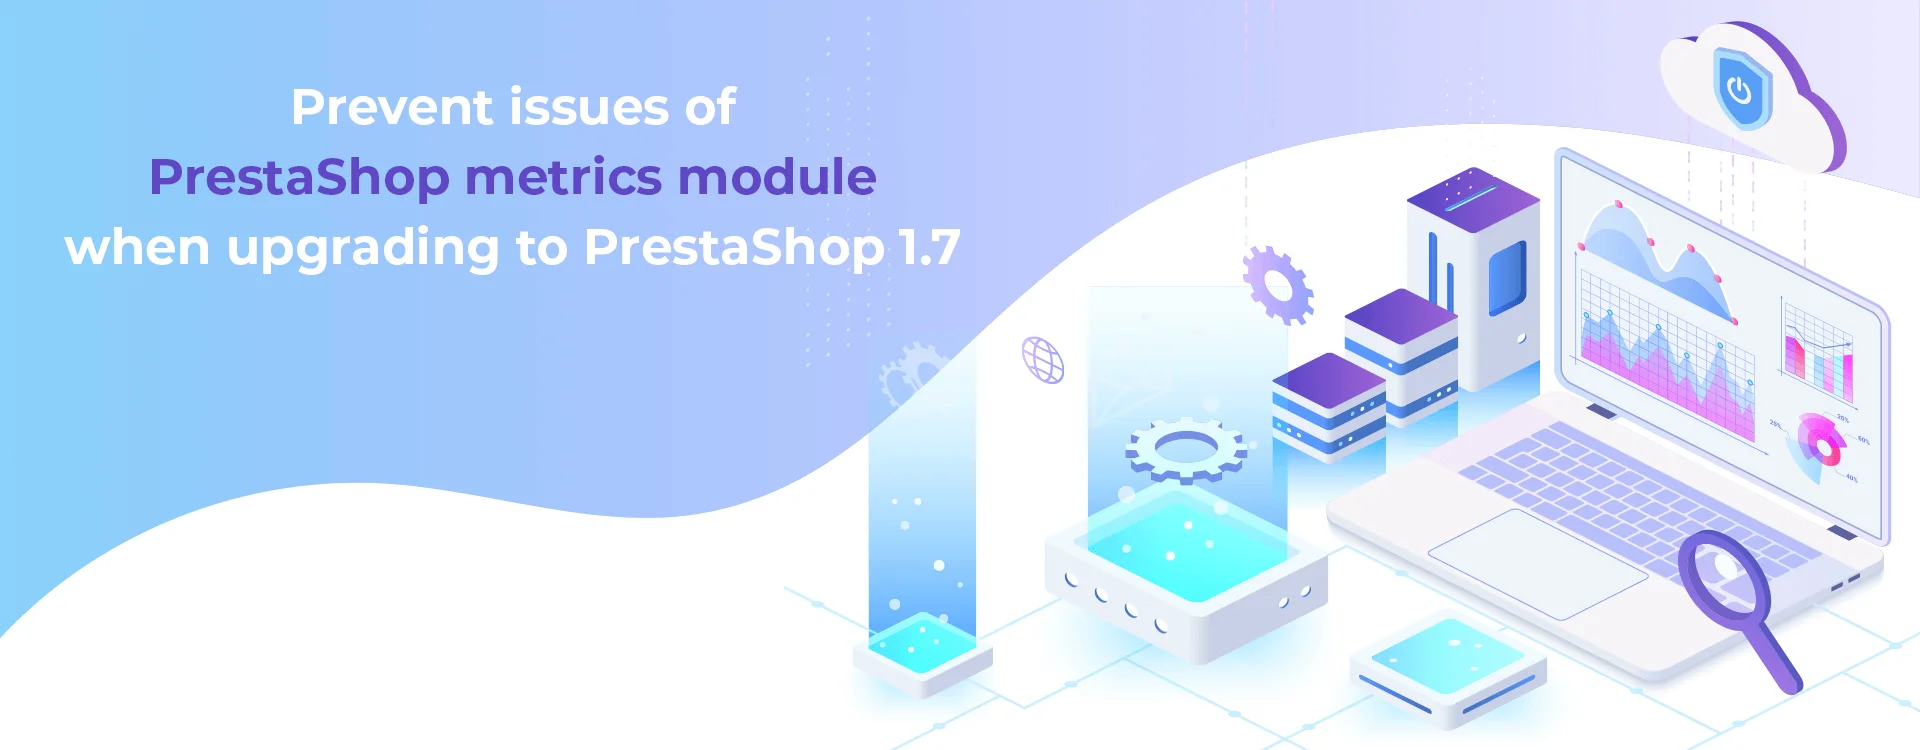 How to prevent issues of PrestaShop metrics module when upgrading to PrestaShop 1.7